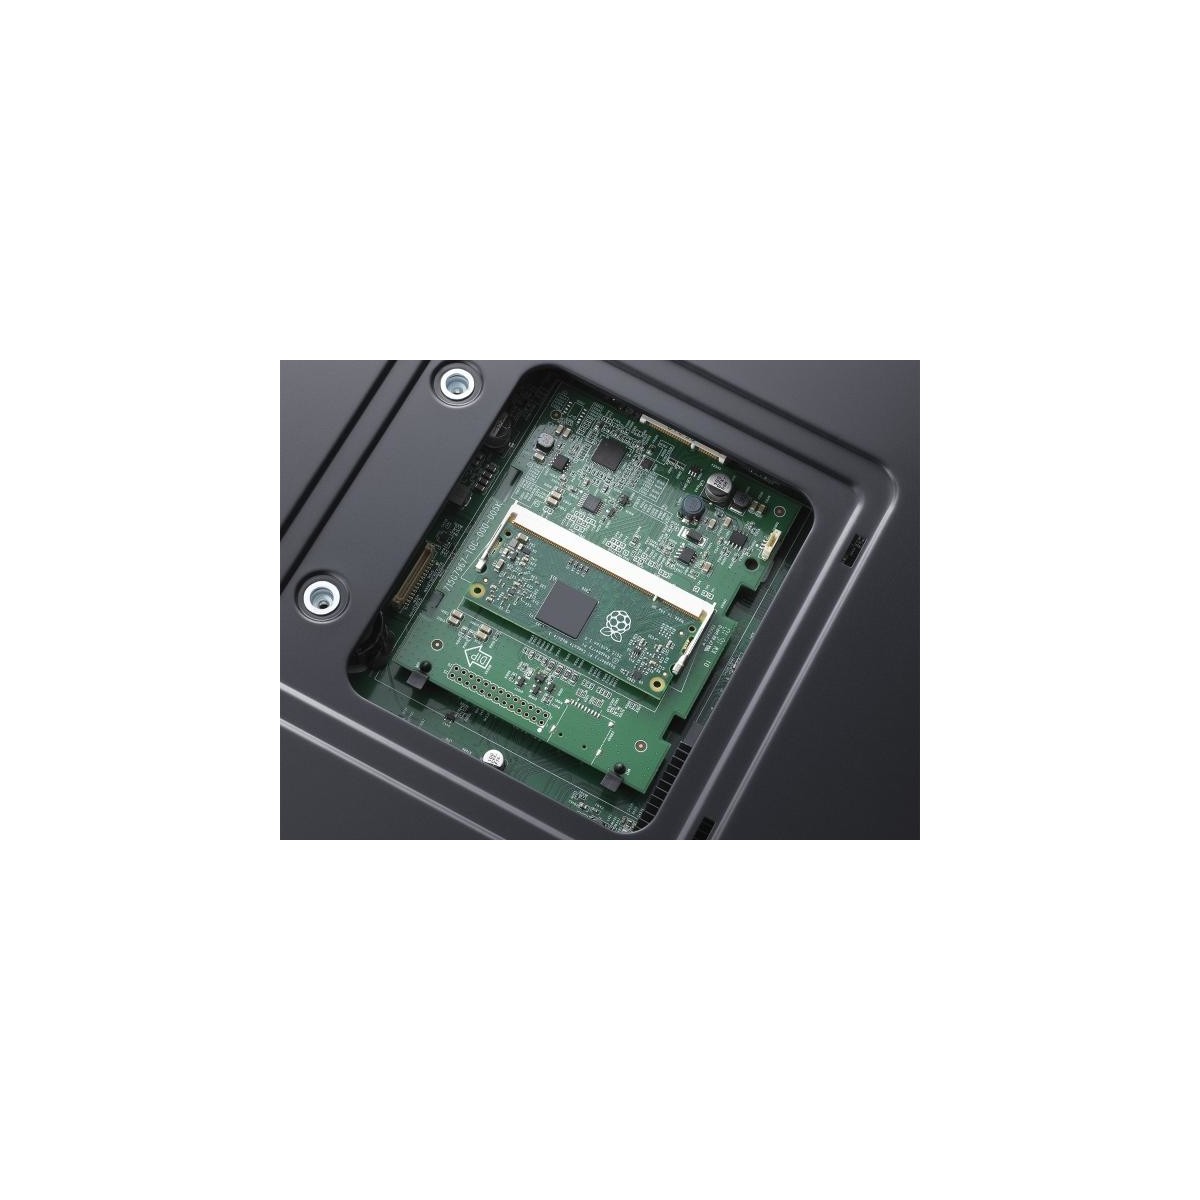 NEC Display 100014585 - Raspberry Pi - NEC - Green